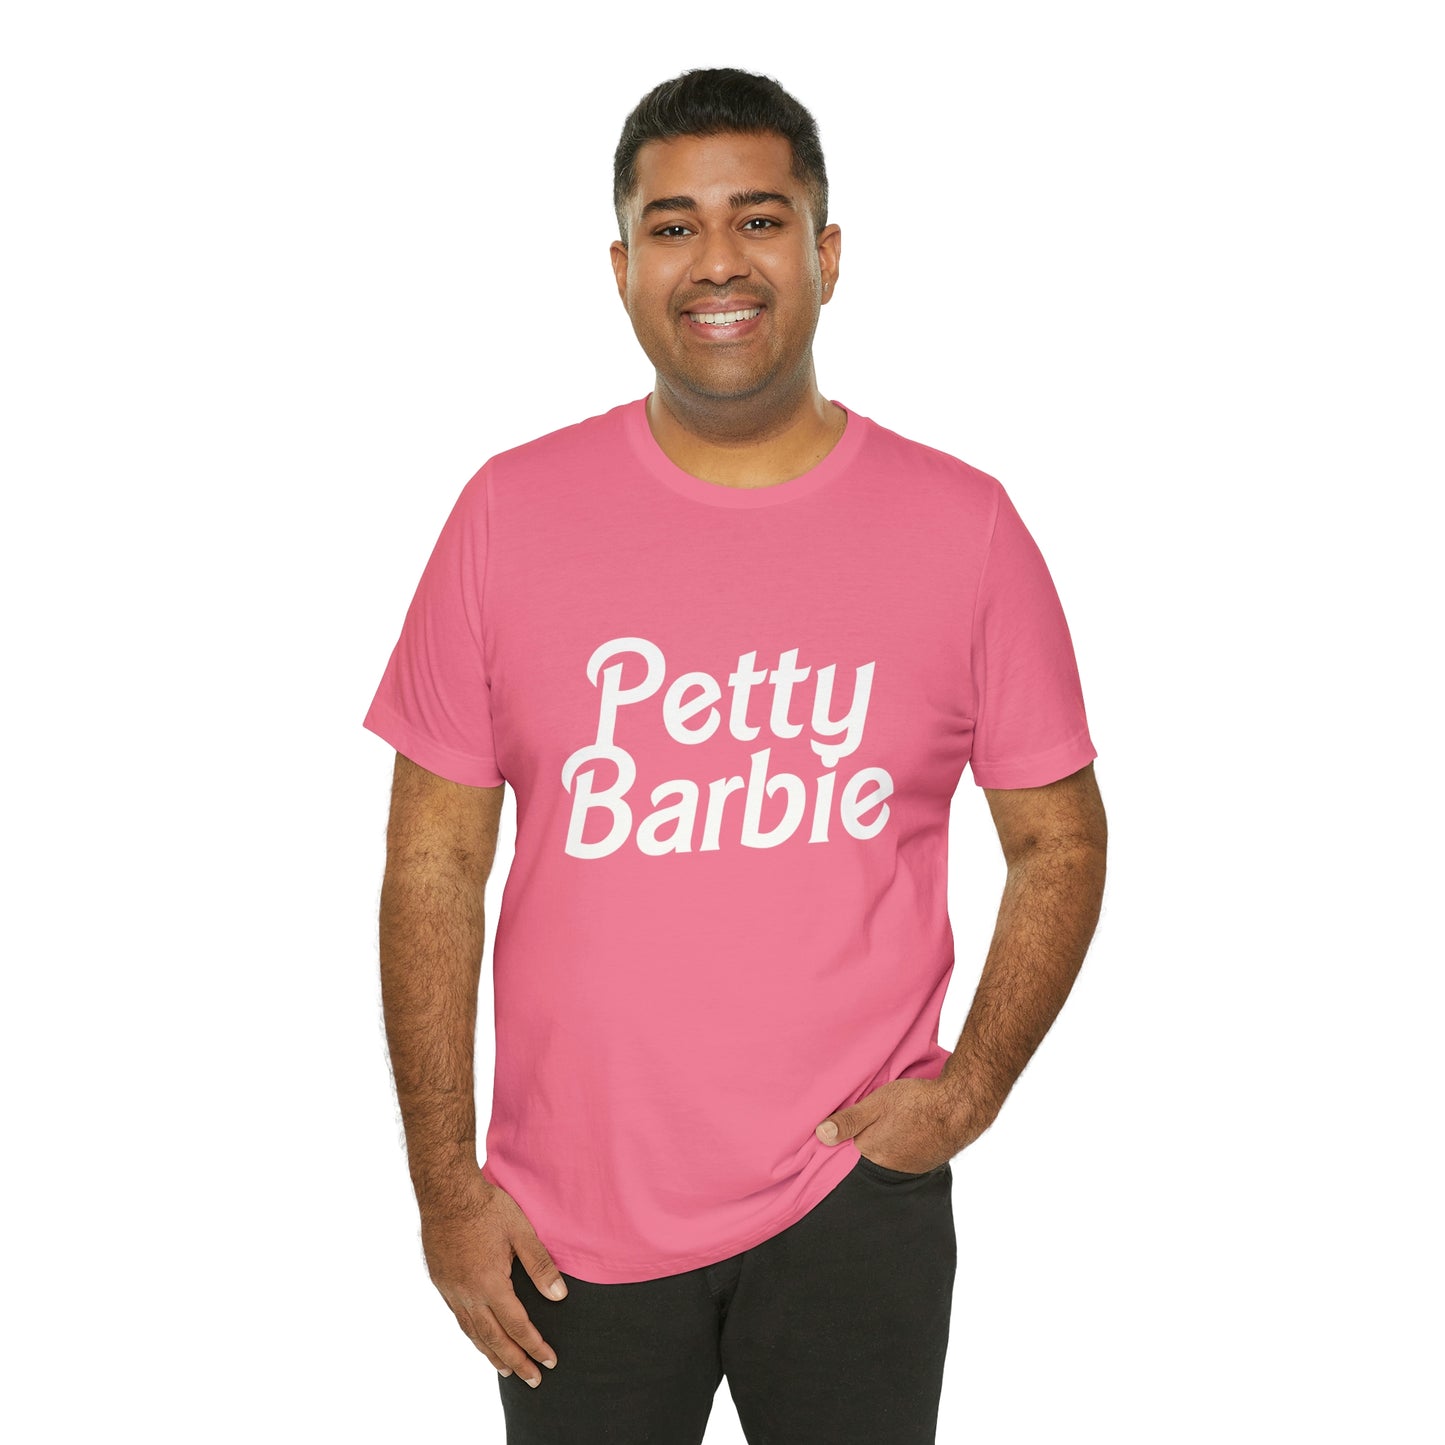 Petty Barbie